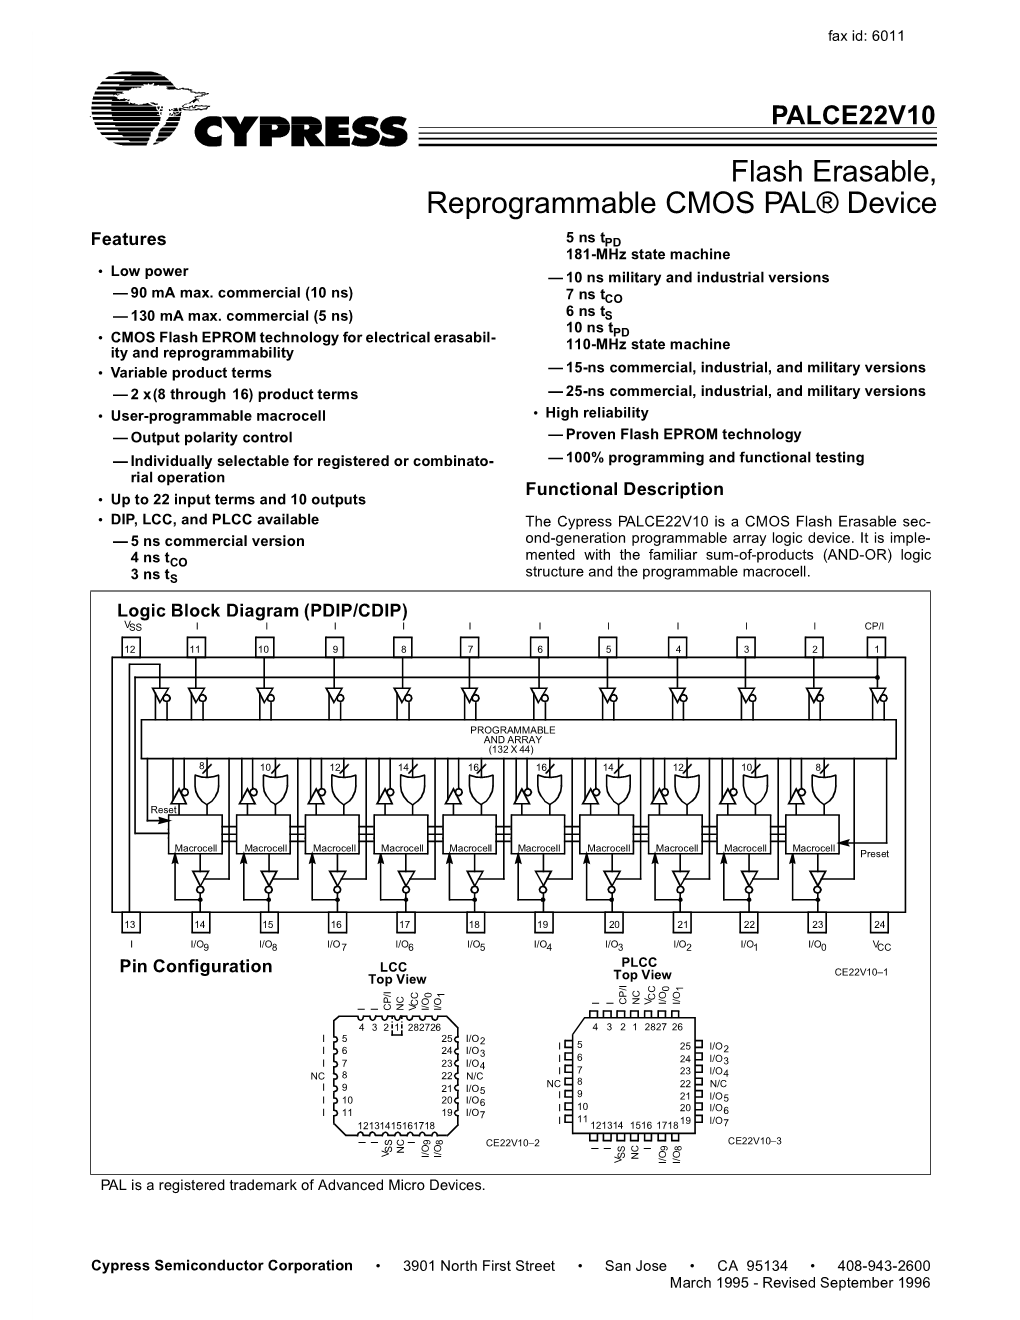 PALCE22V10 Flash Erasable, Reprogrammable CMOS PAL® Device